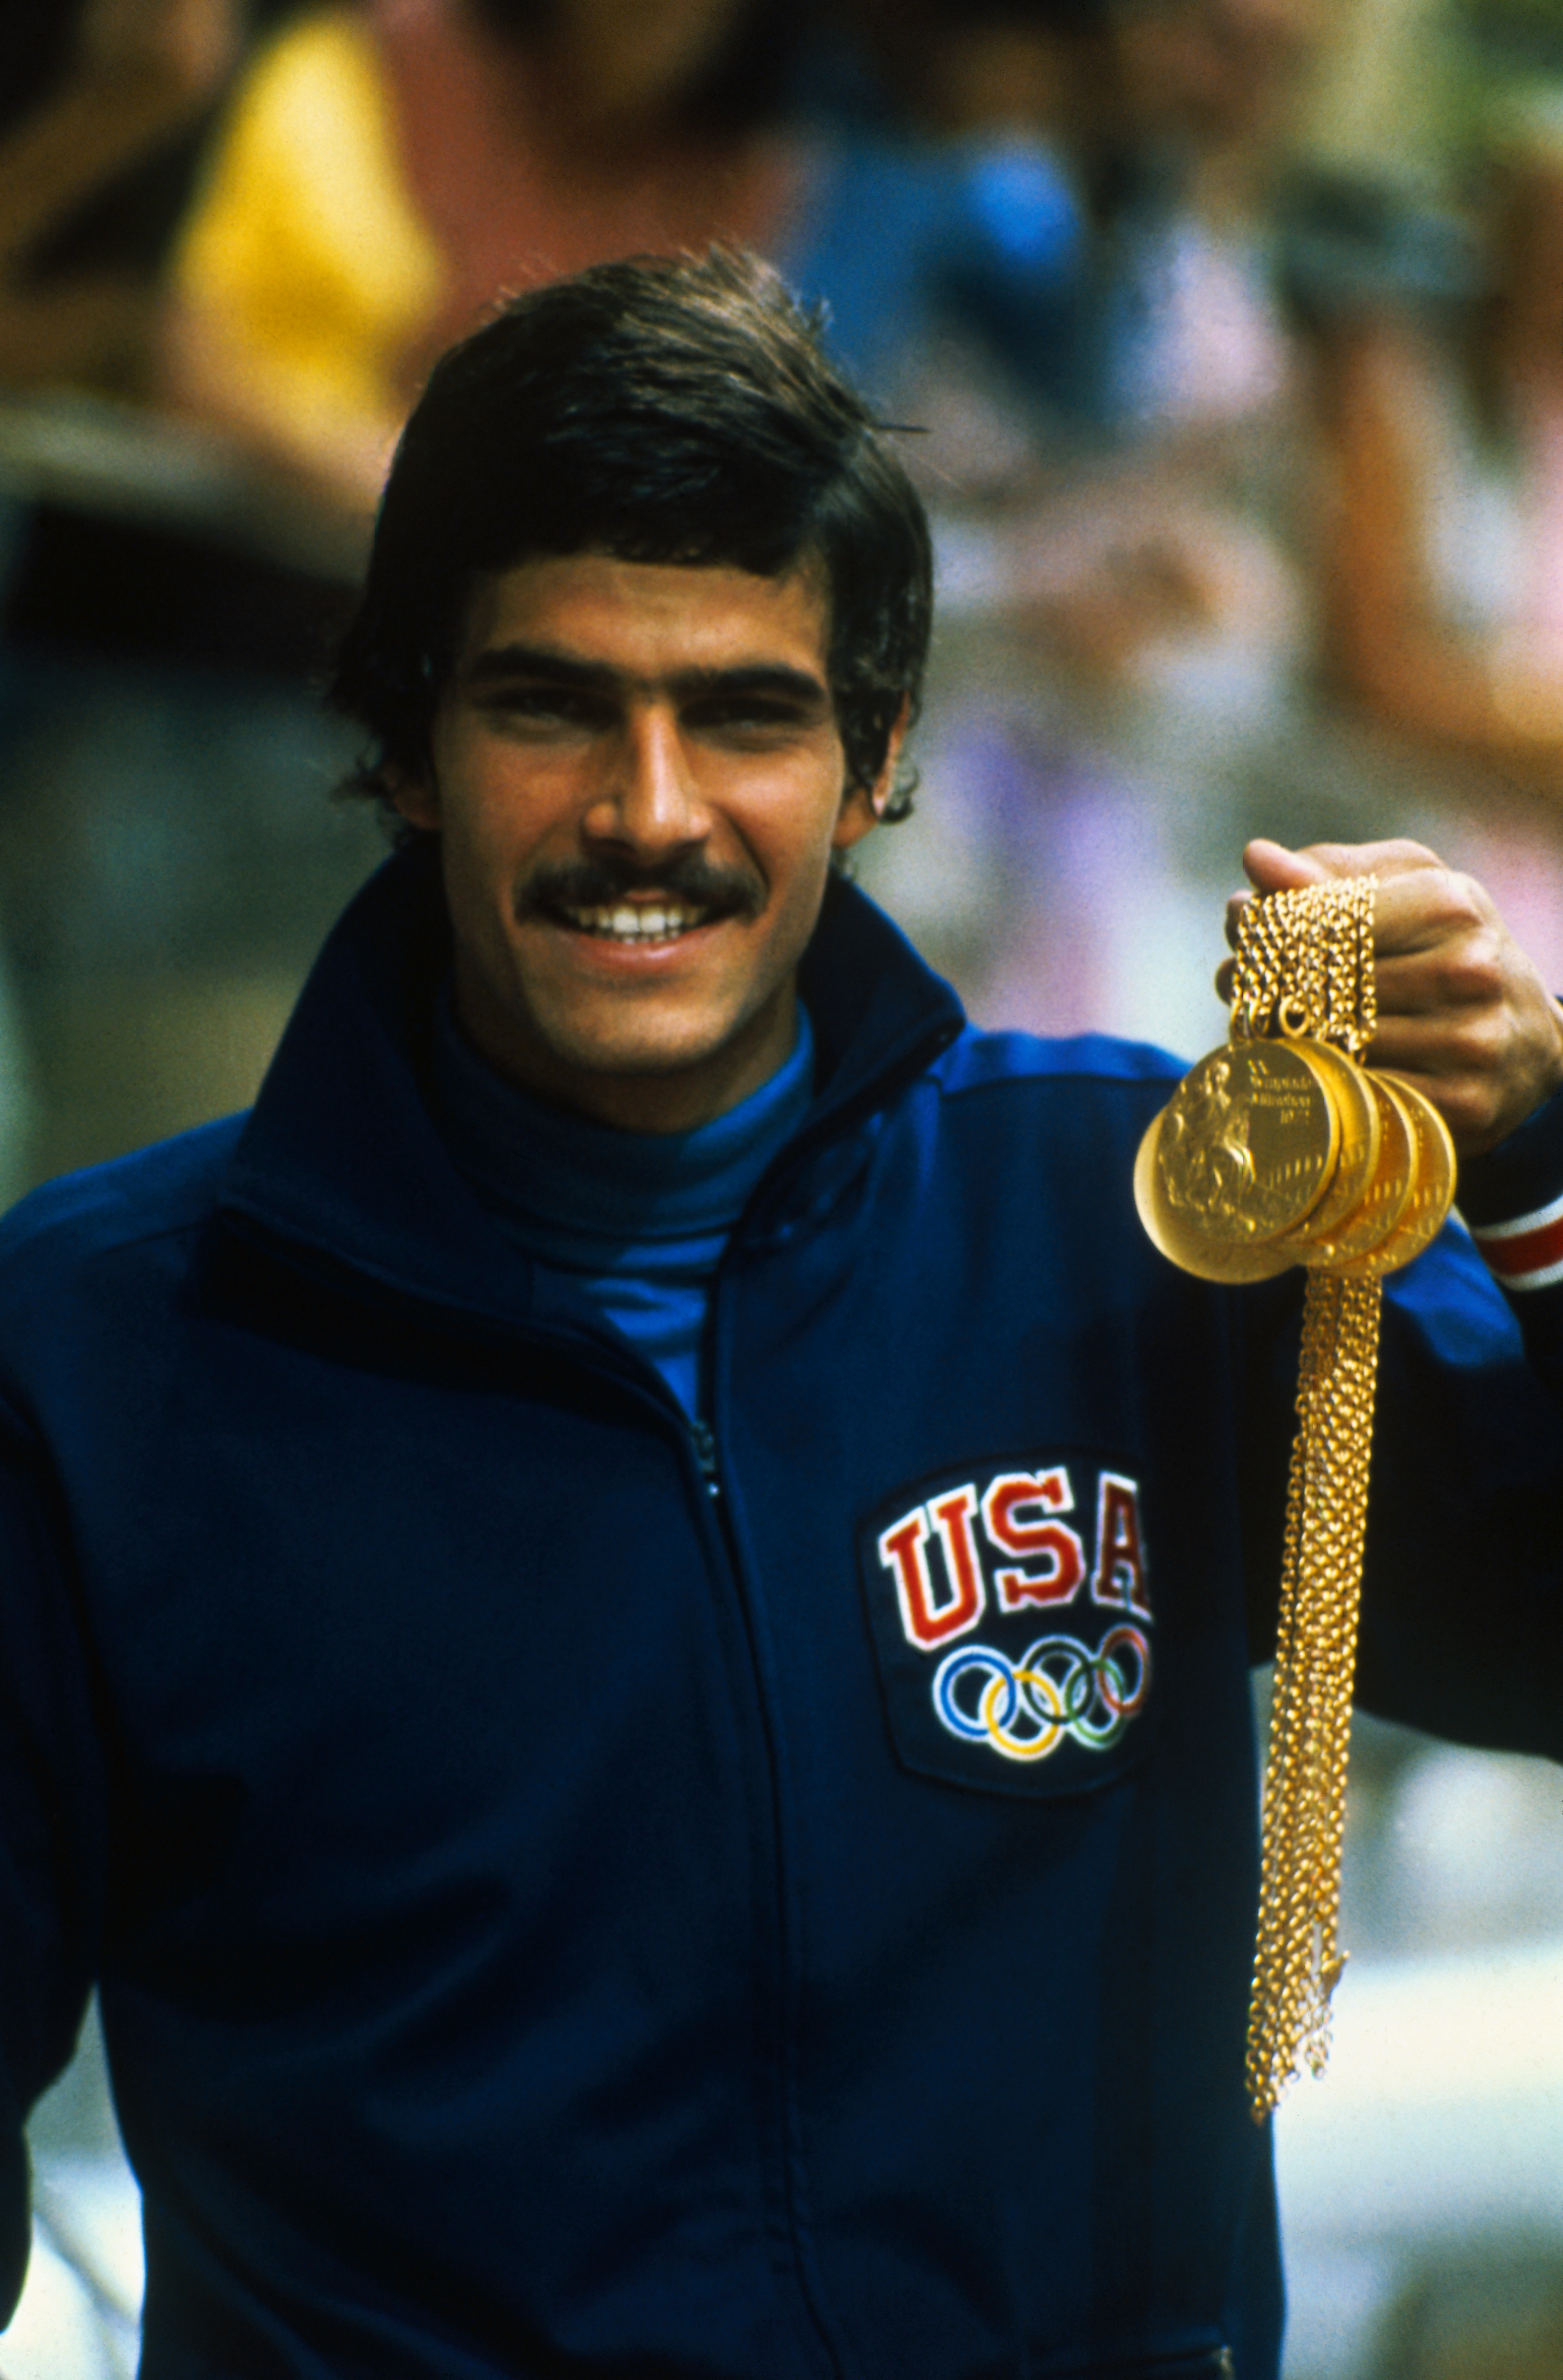 spitz 1972 Olympics